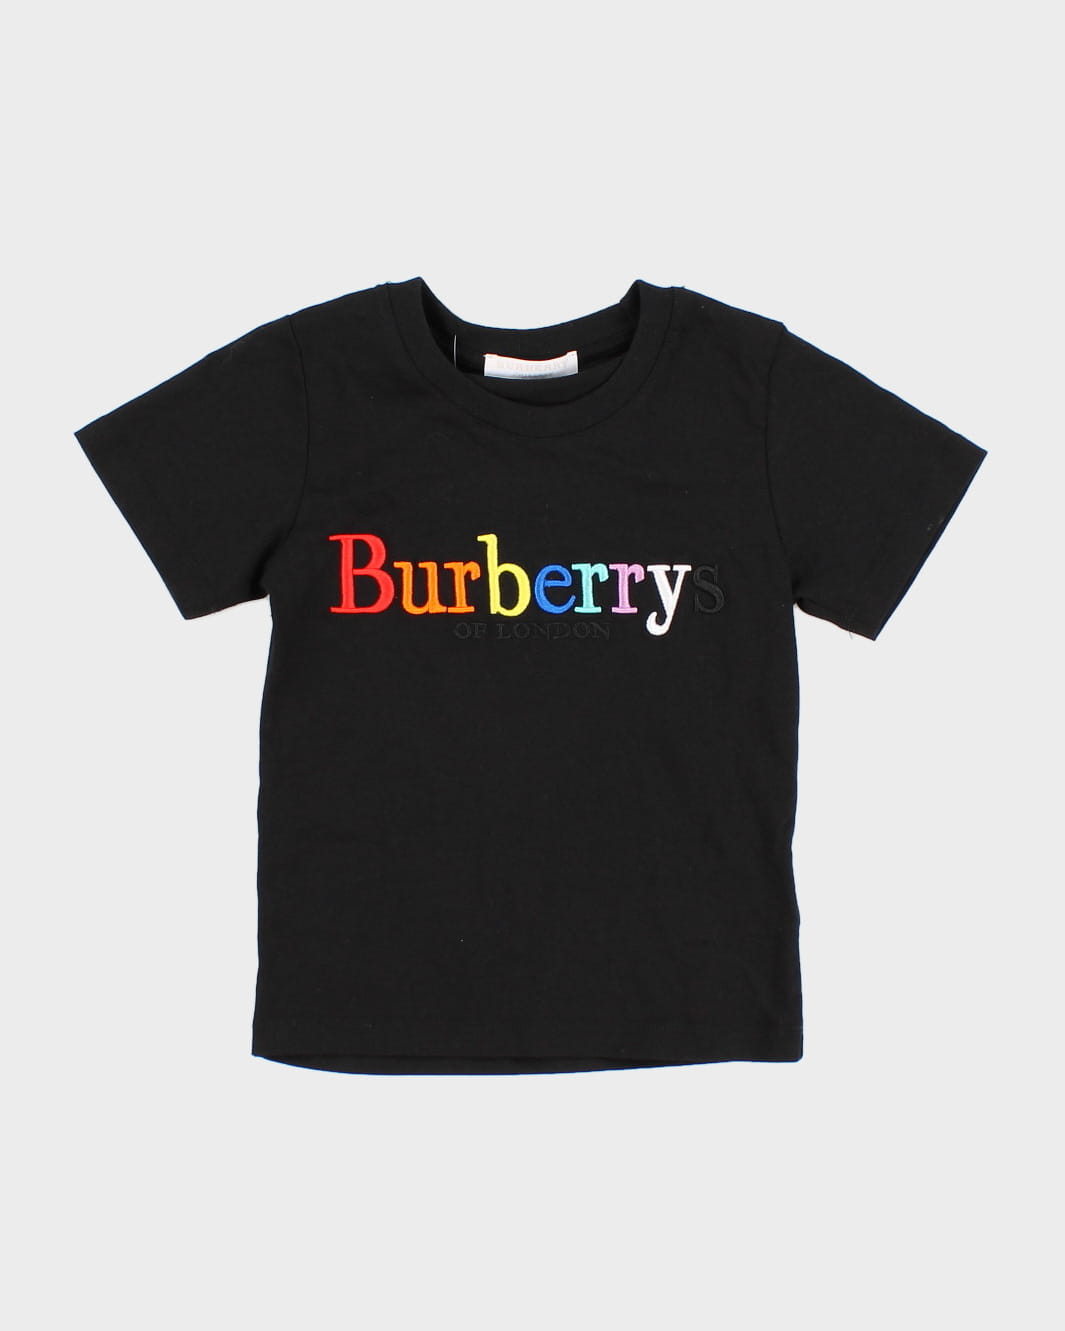 Baby Burberry Tee